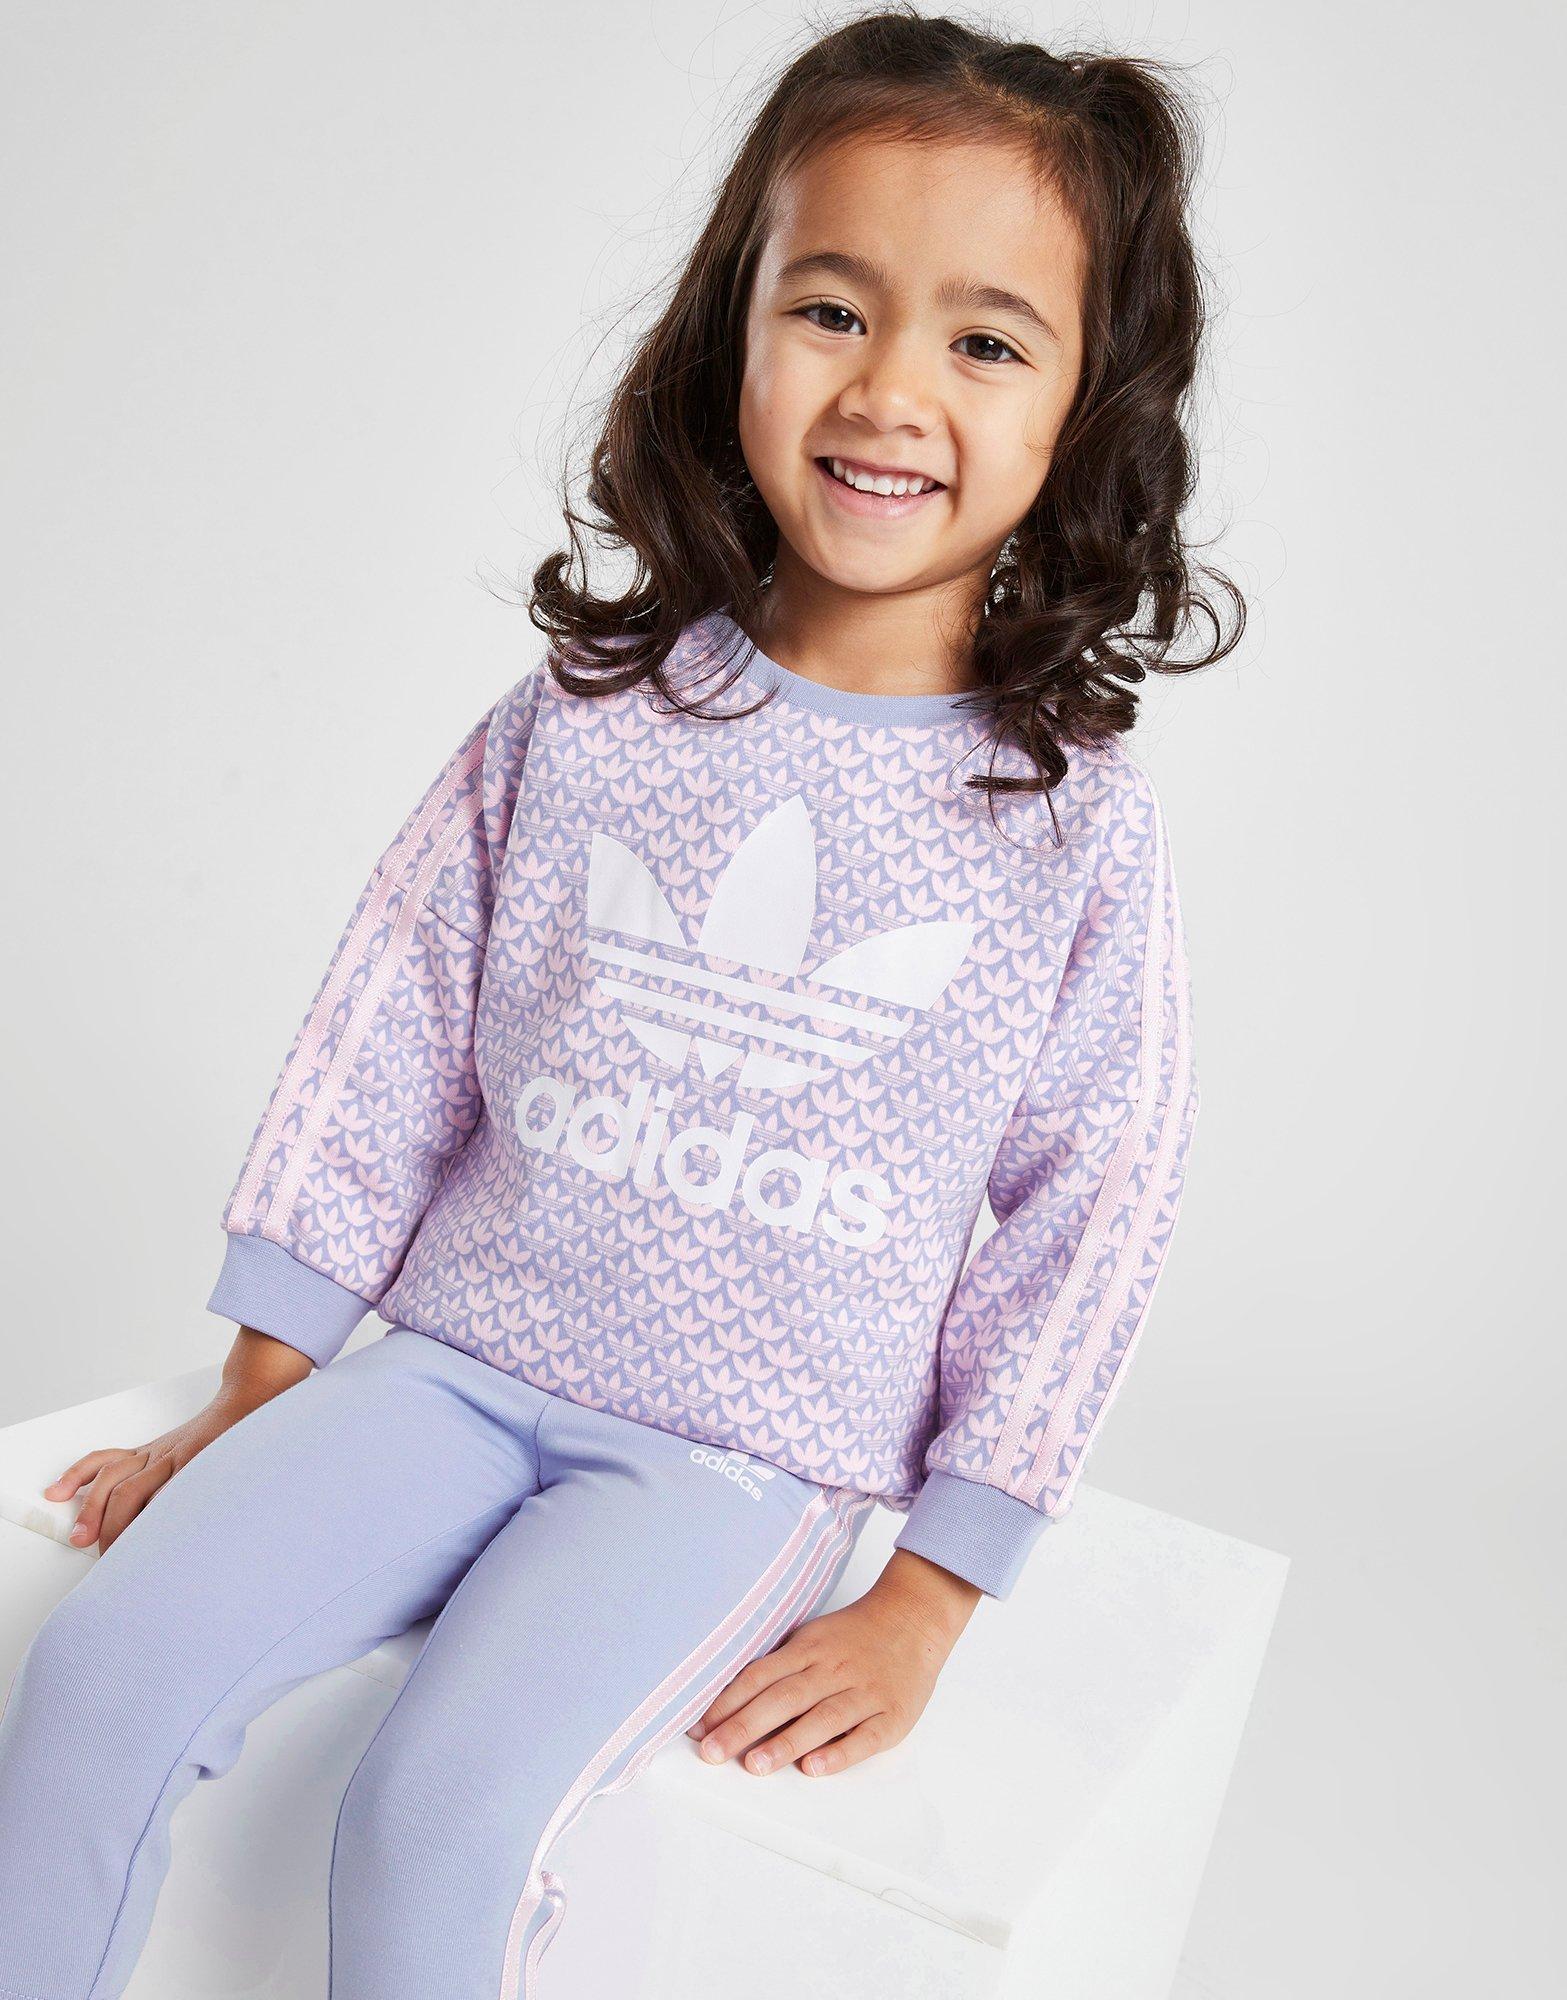 Adidas Little Girls' Fluidity Legging Sets, Little Girls' Activewear